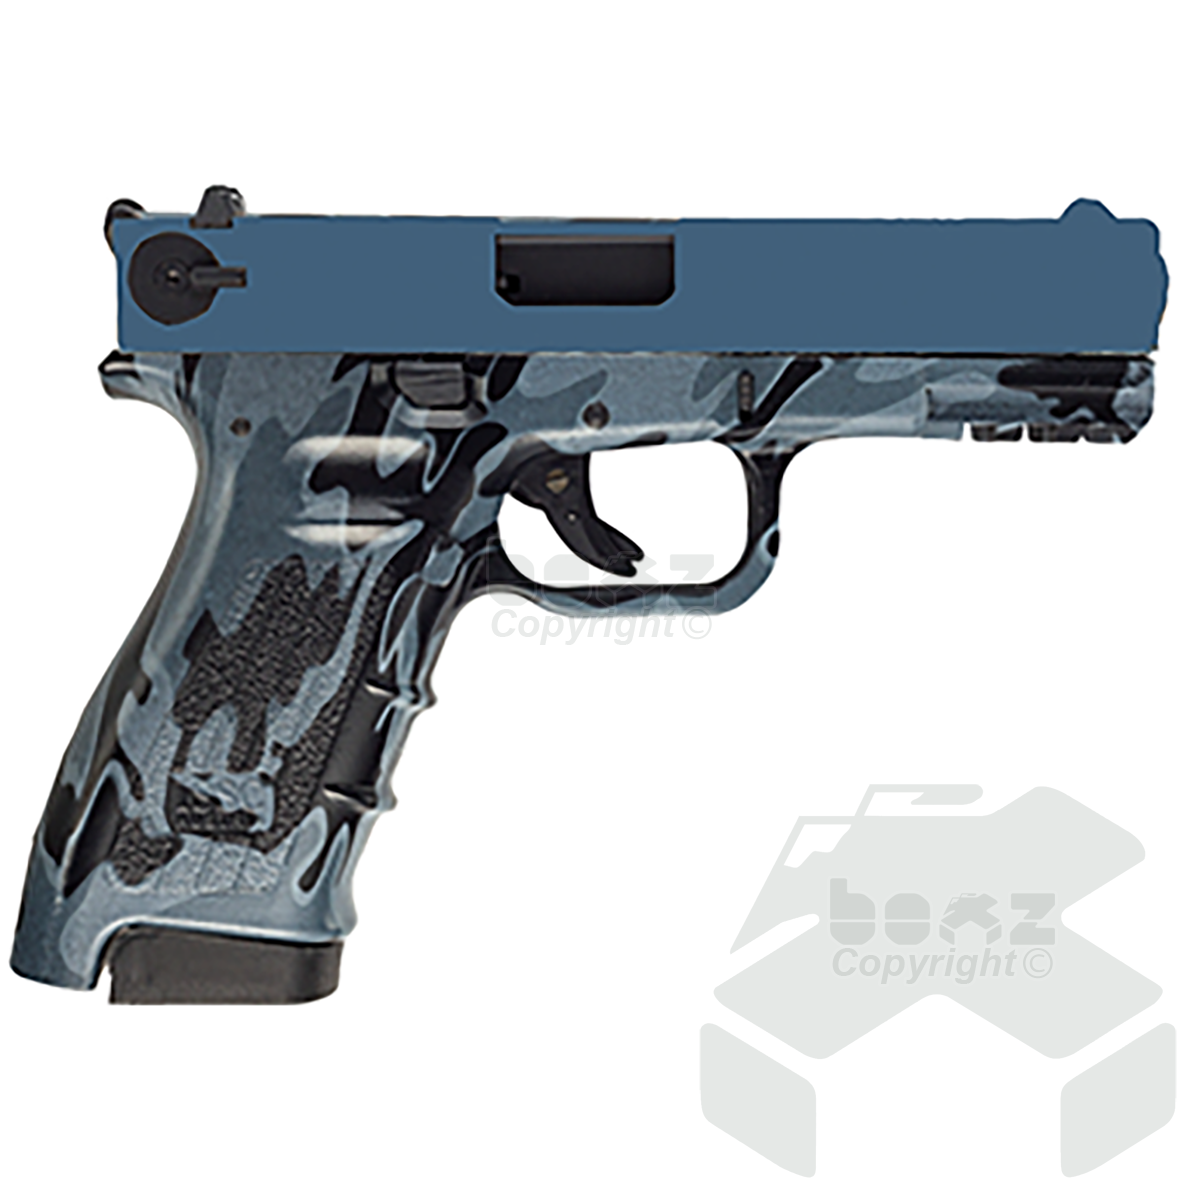 Ceonic M22 Blank Firing Pistol - 9mm - Blue Marin